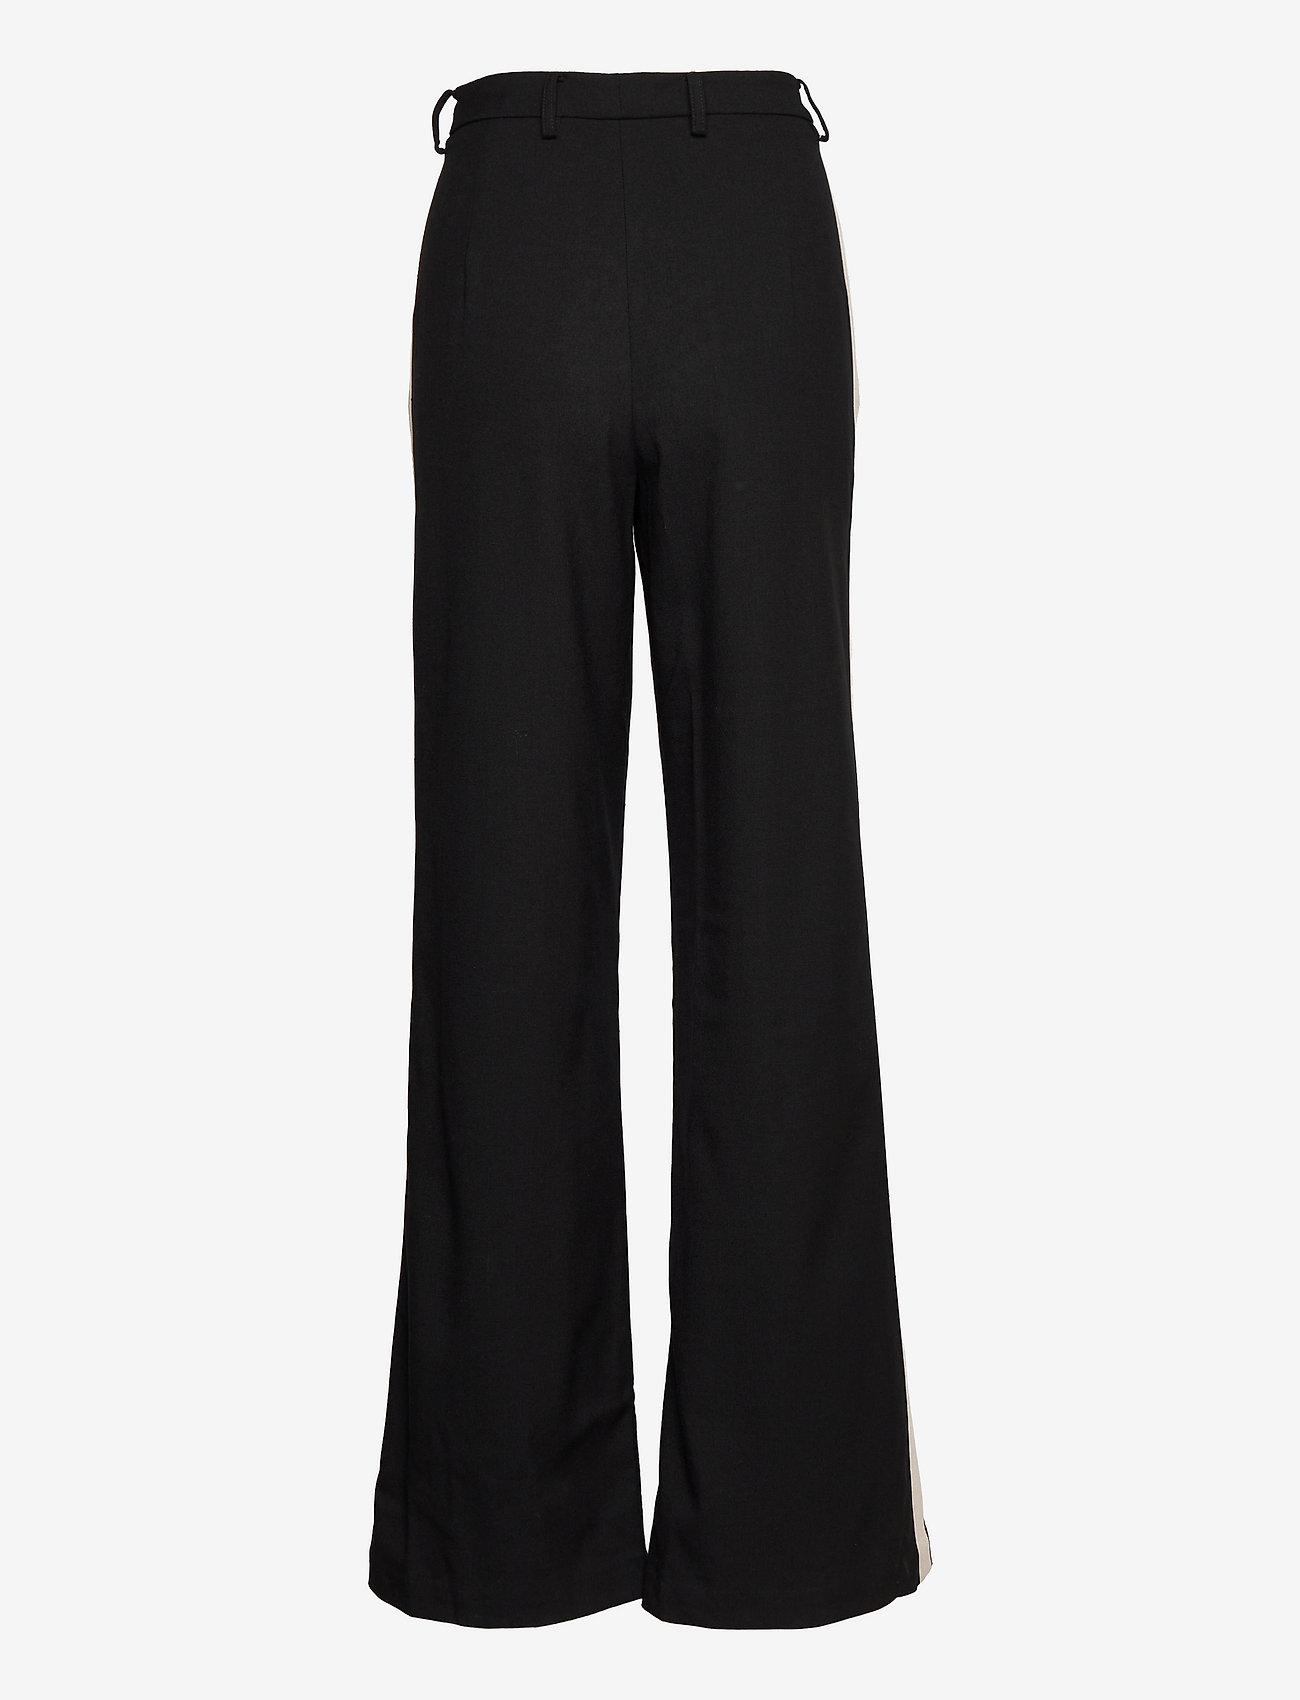 Malina - Willow tuxedo pants - black - 1